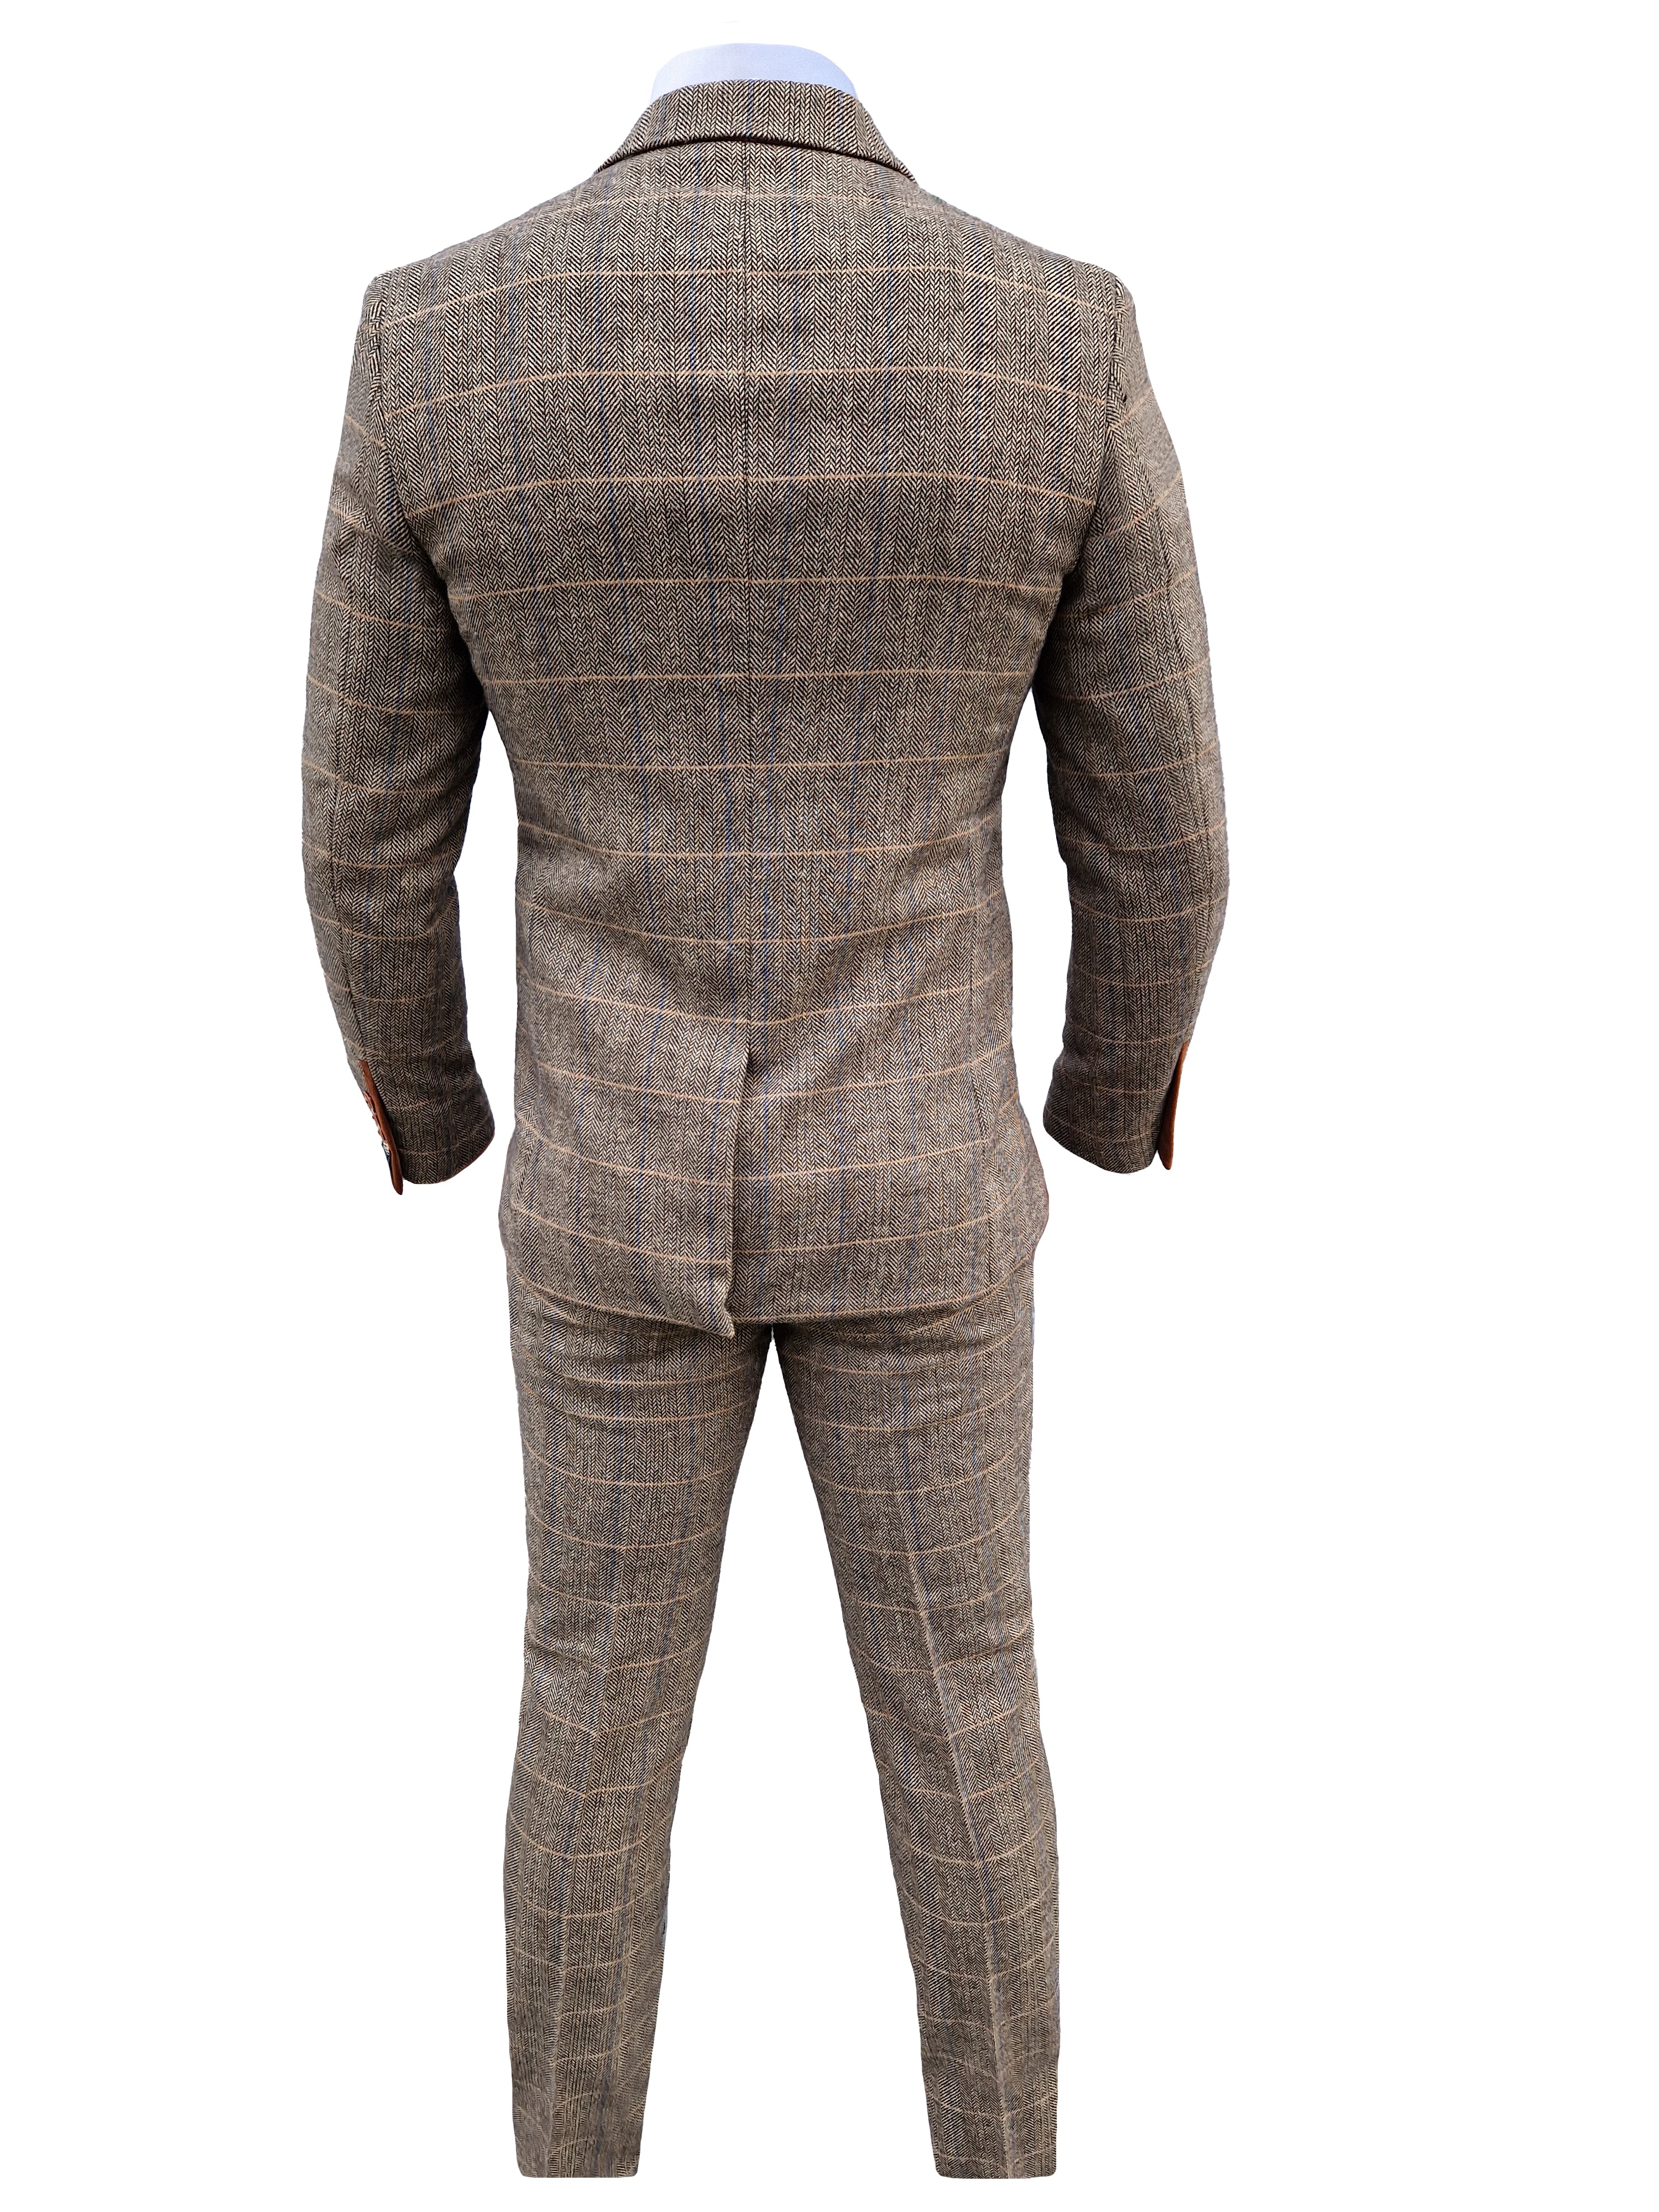 3-Piece Men's Suit Marc Darcy Herringbone Brown - Mix and Match